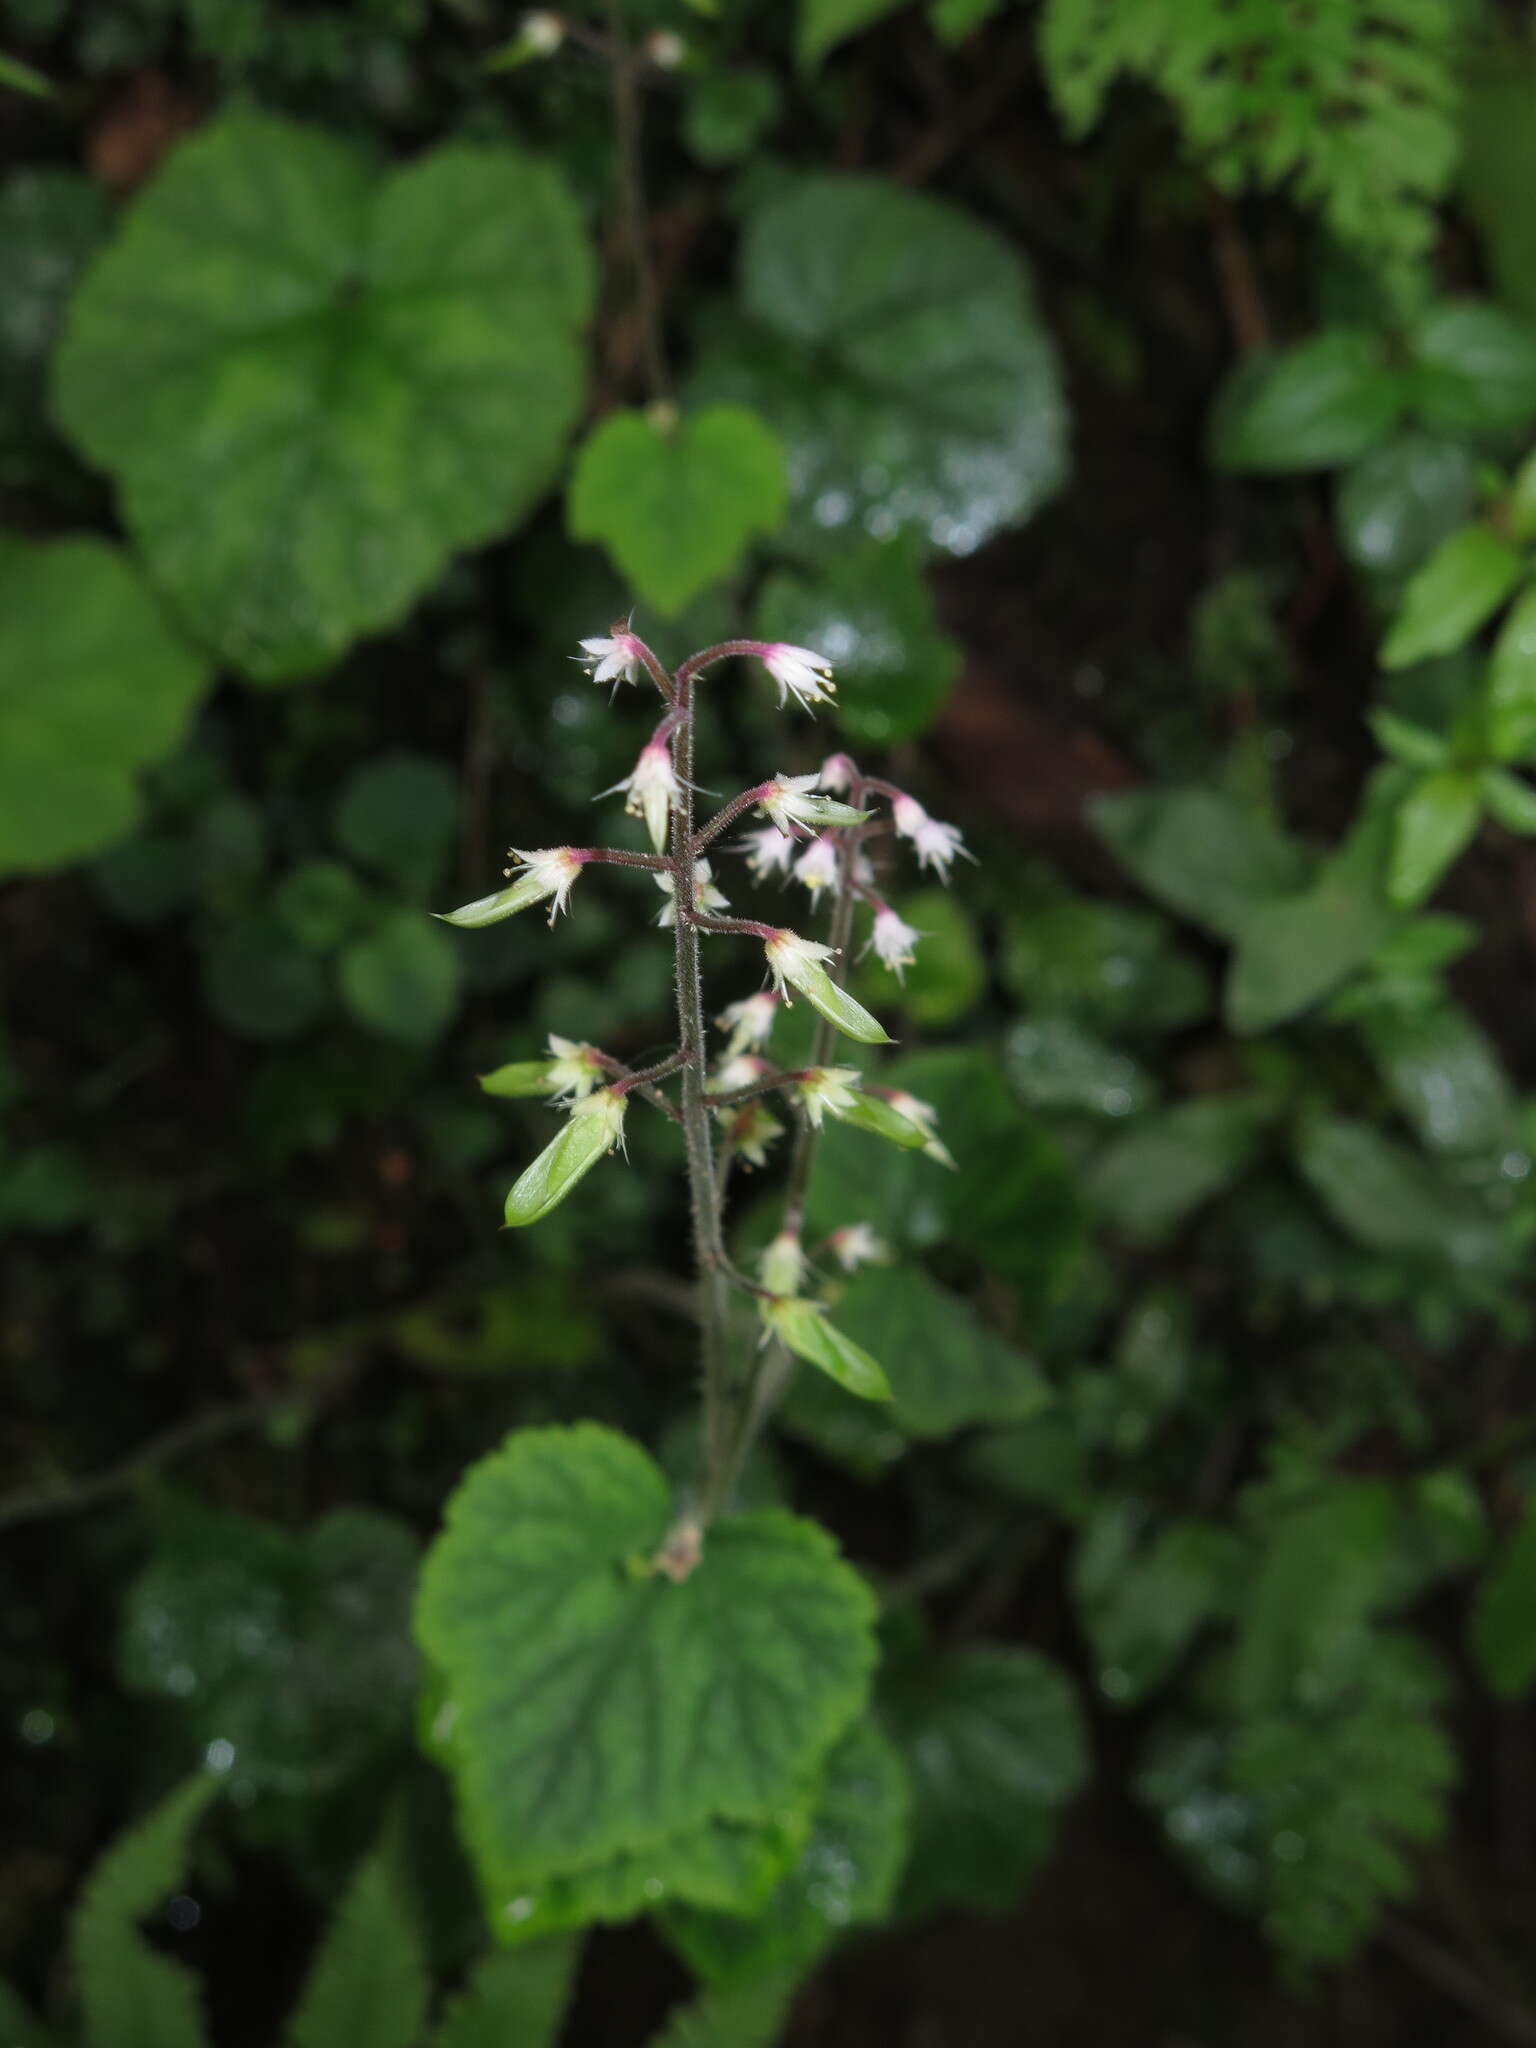 Image of Tiarella polyphylla D. Don